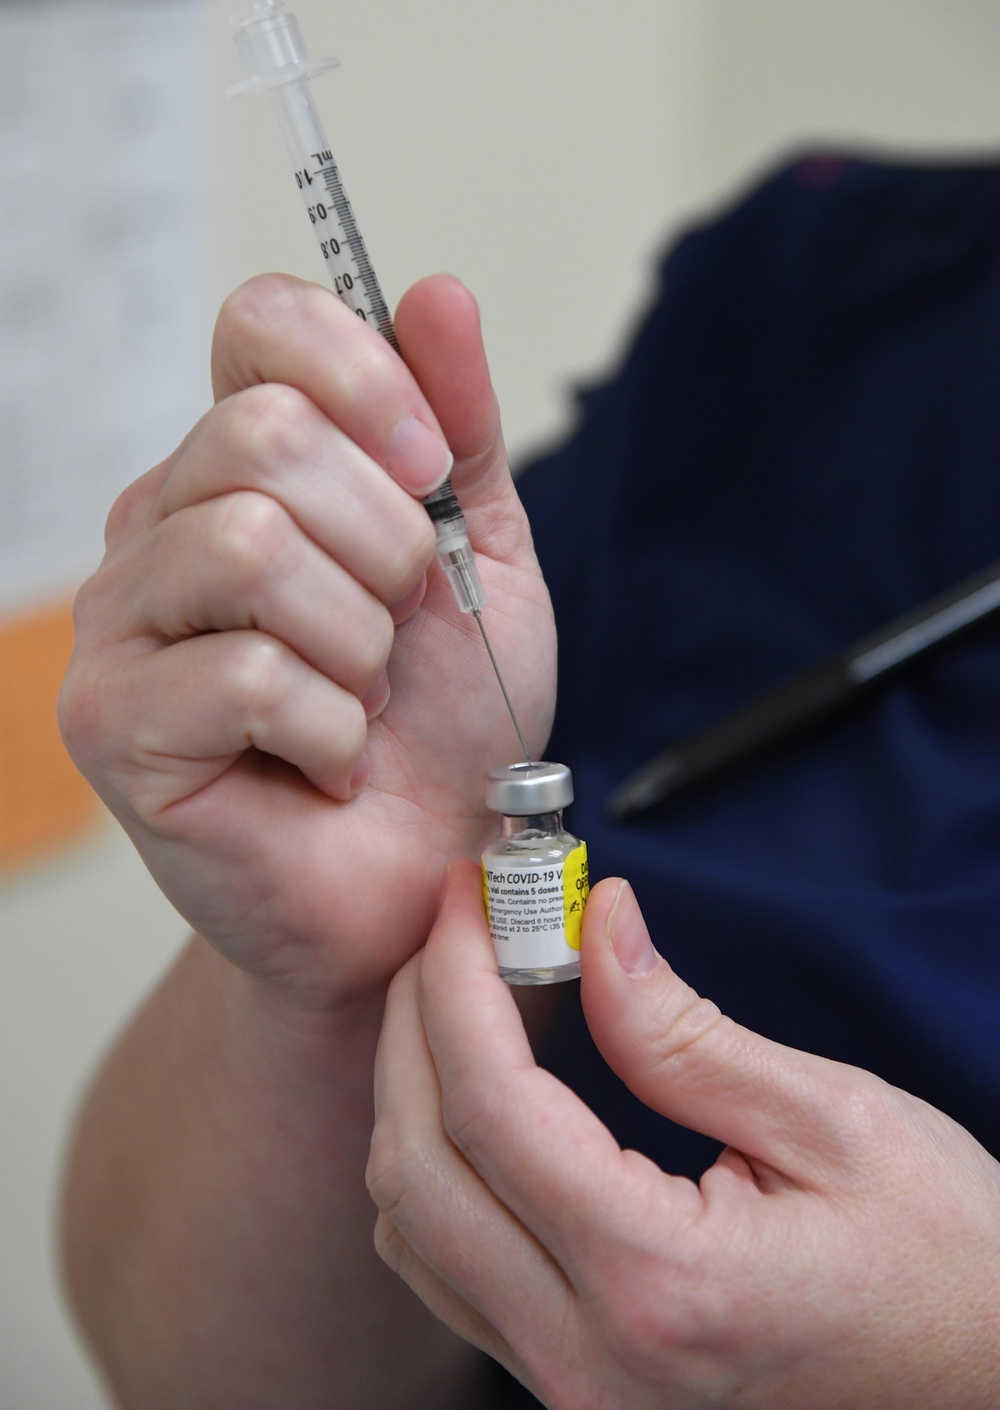 Dragon medics receive COVID-19 vaccine